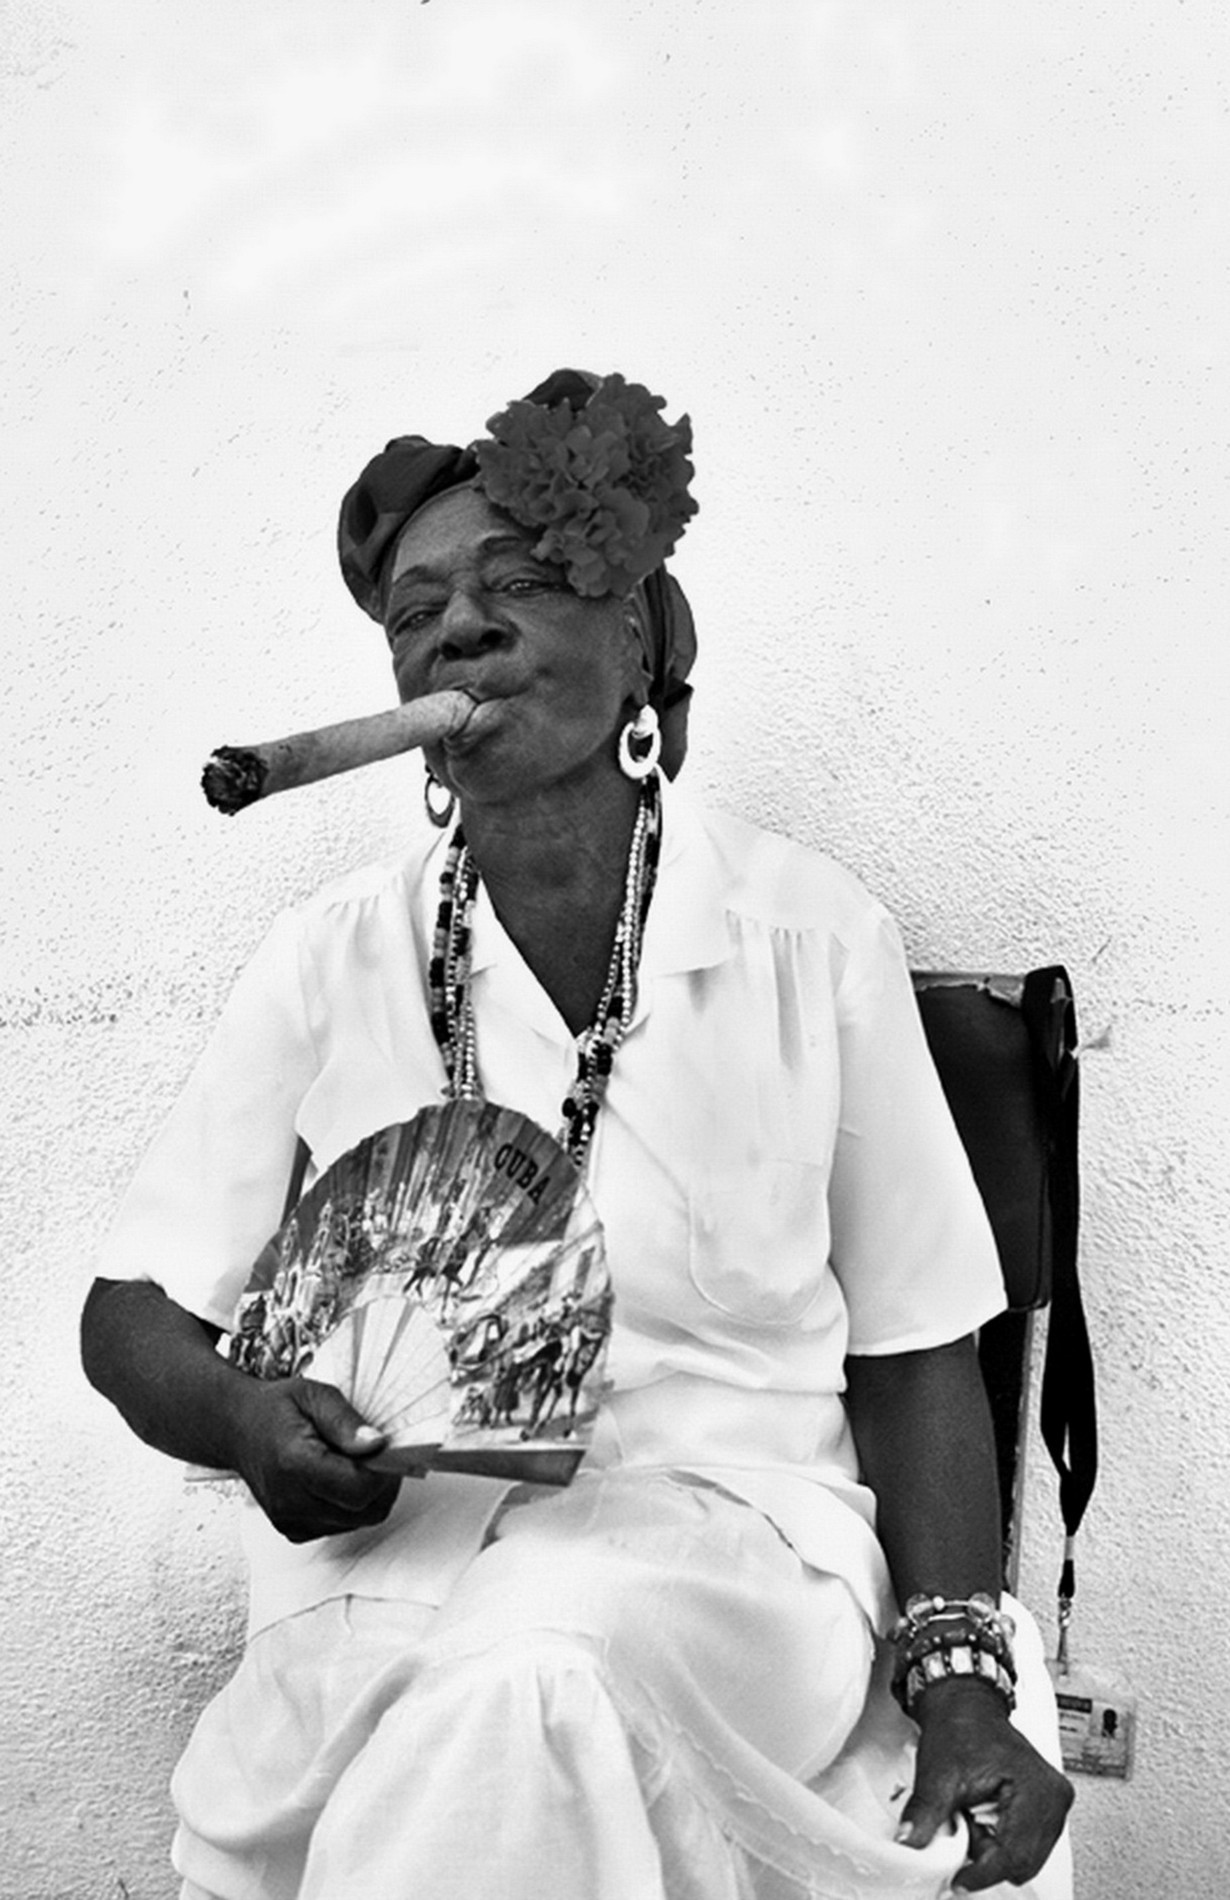 2 место в категории «Люди» среди профессионалов 2019. Дама с сигарой. Гавана, Куба. Автор Х. Аллен Беновиц